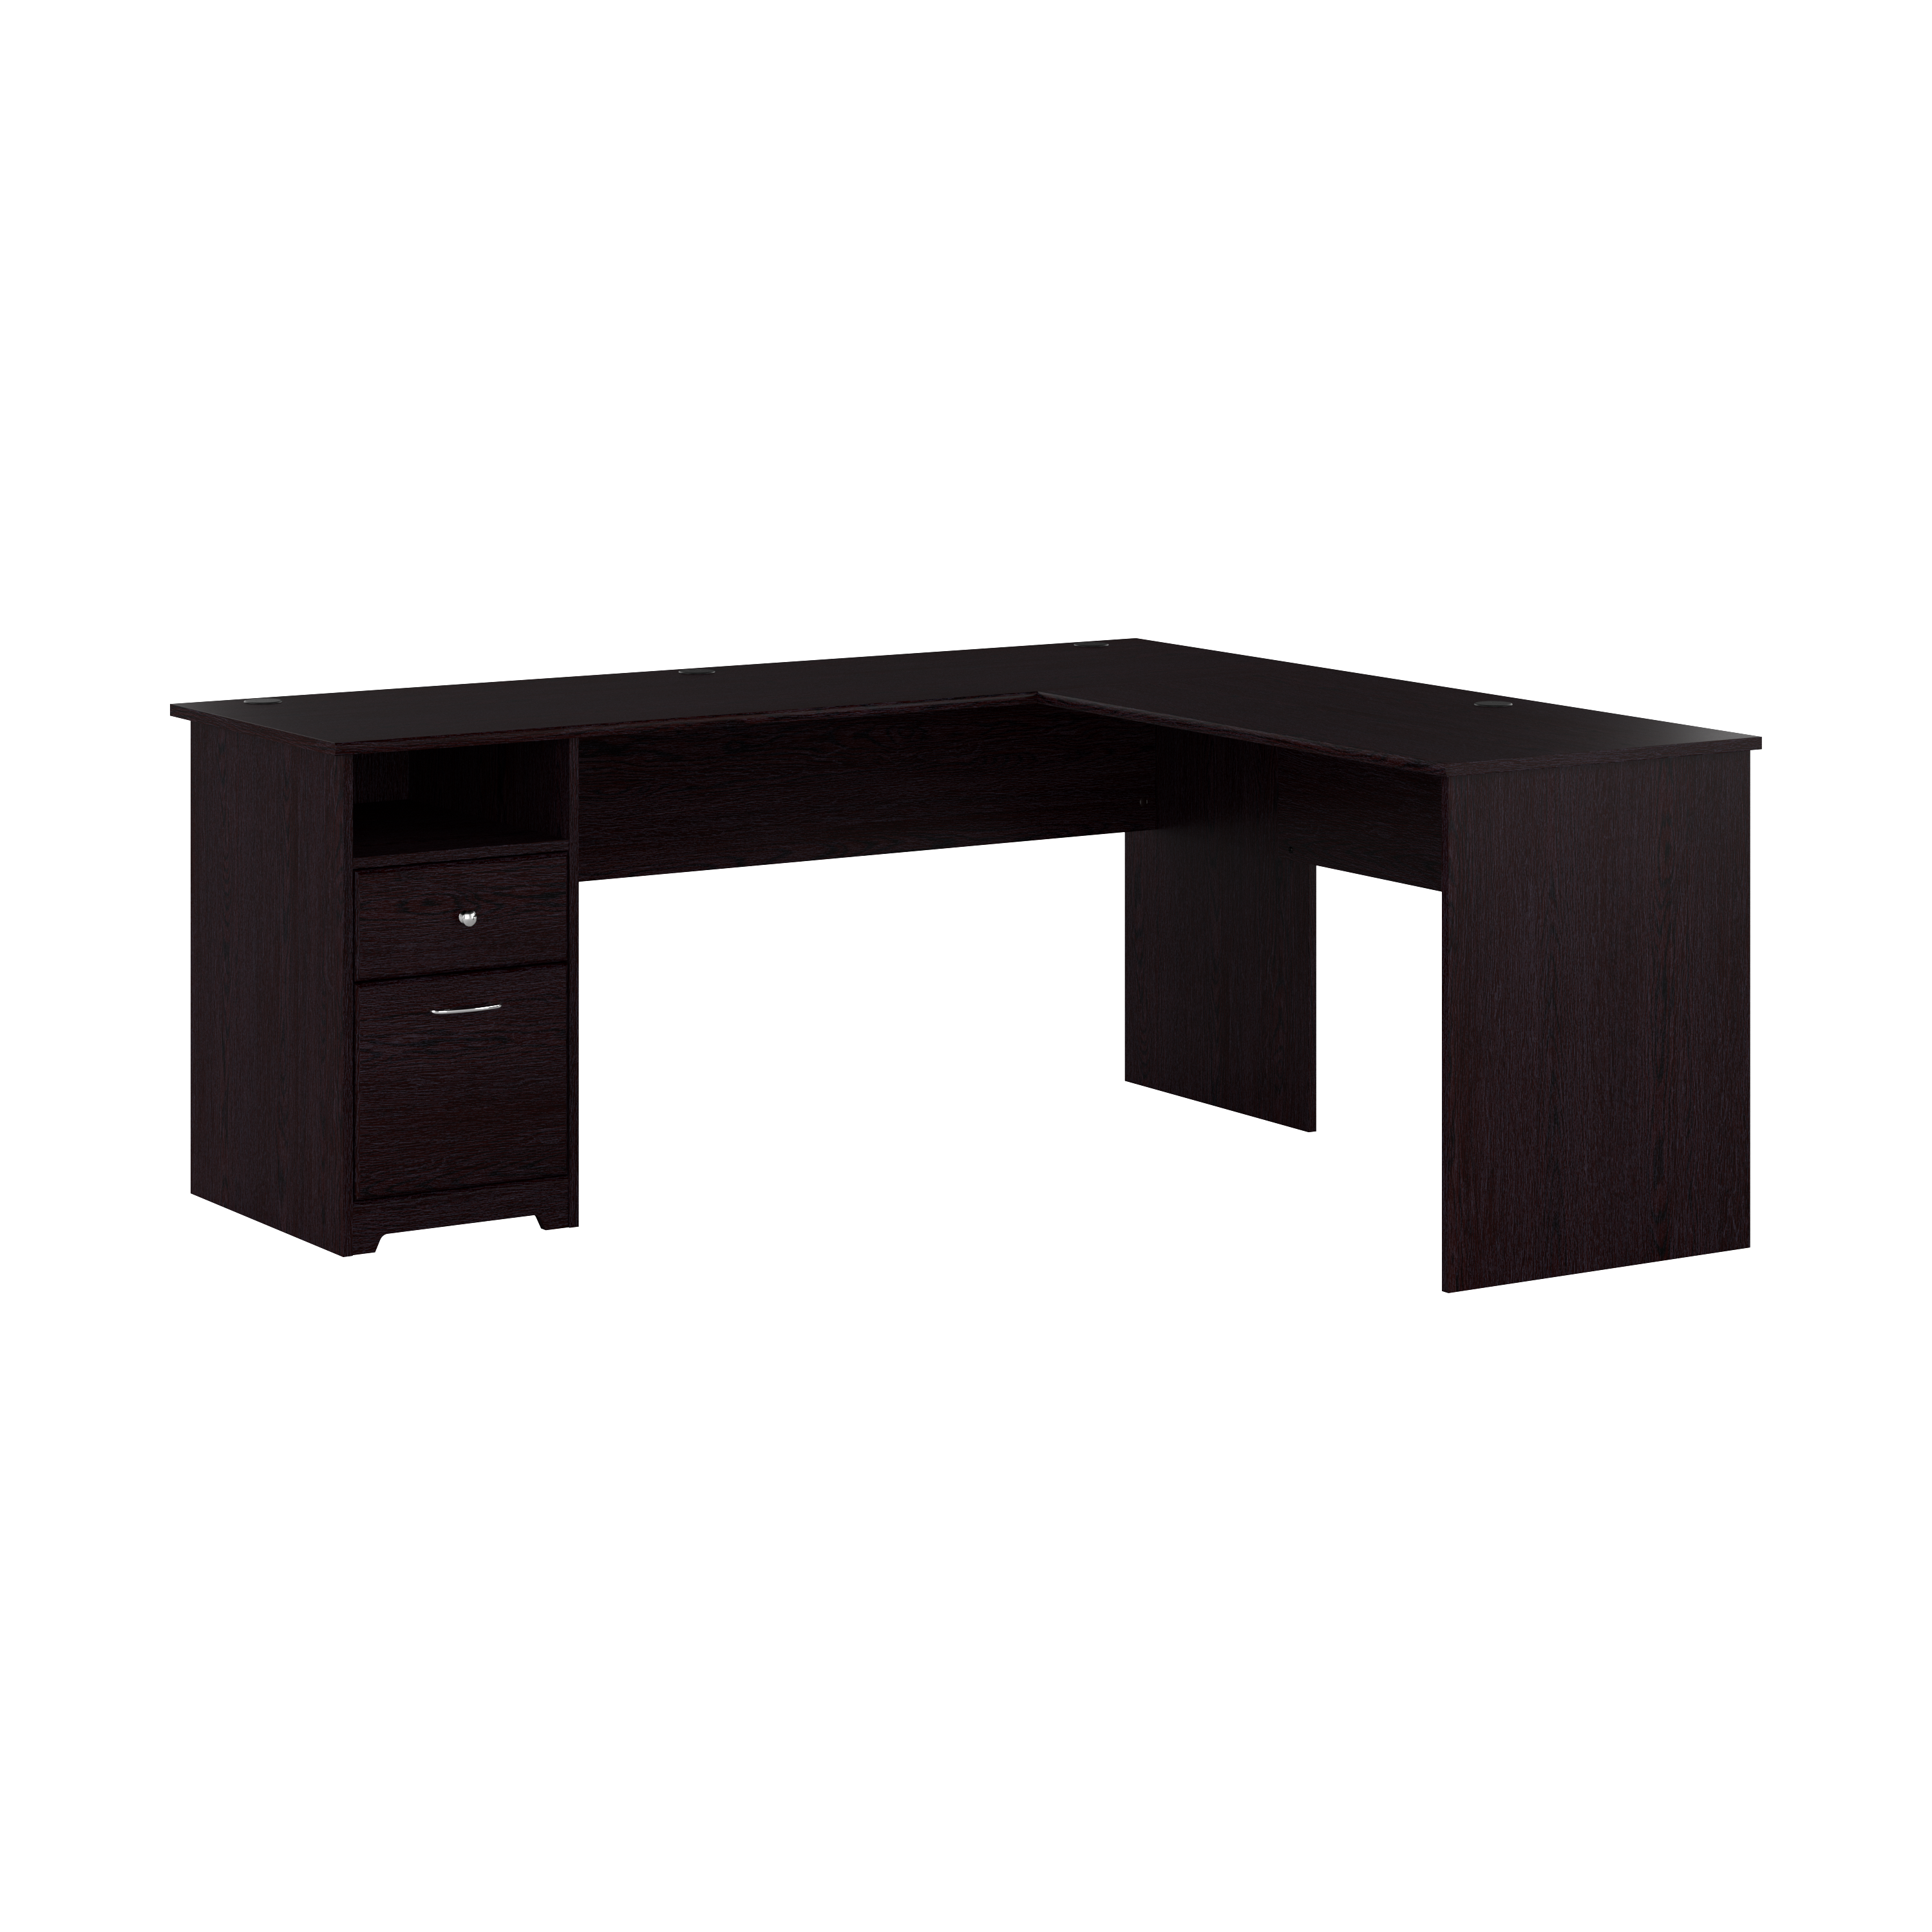 Shop Bush Furniture Cabot 72W L Shaped Computer Desk with Drawers 02 CAB051EPO #color_espresso oak